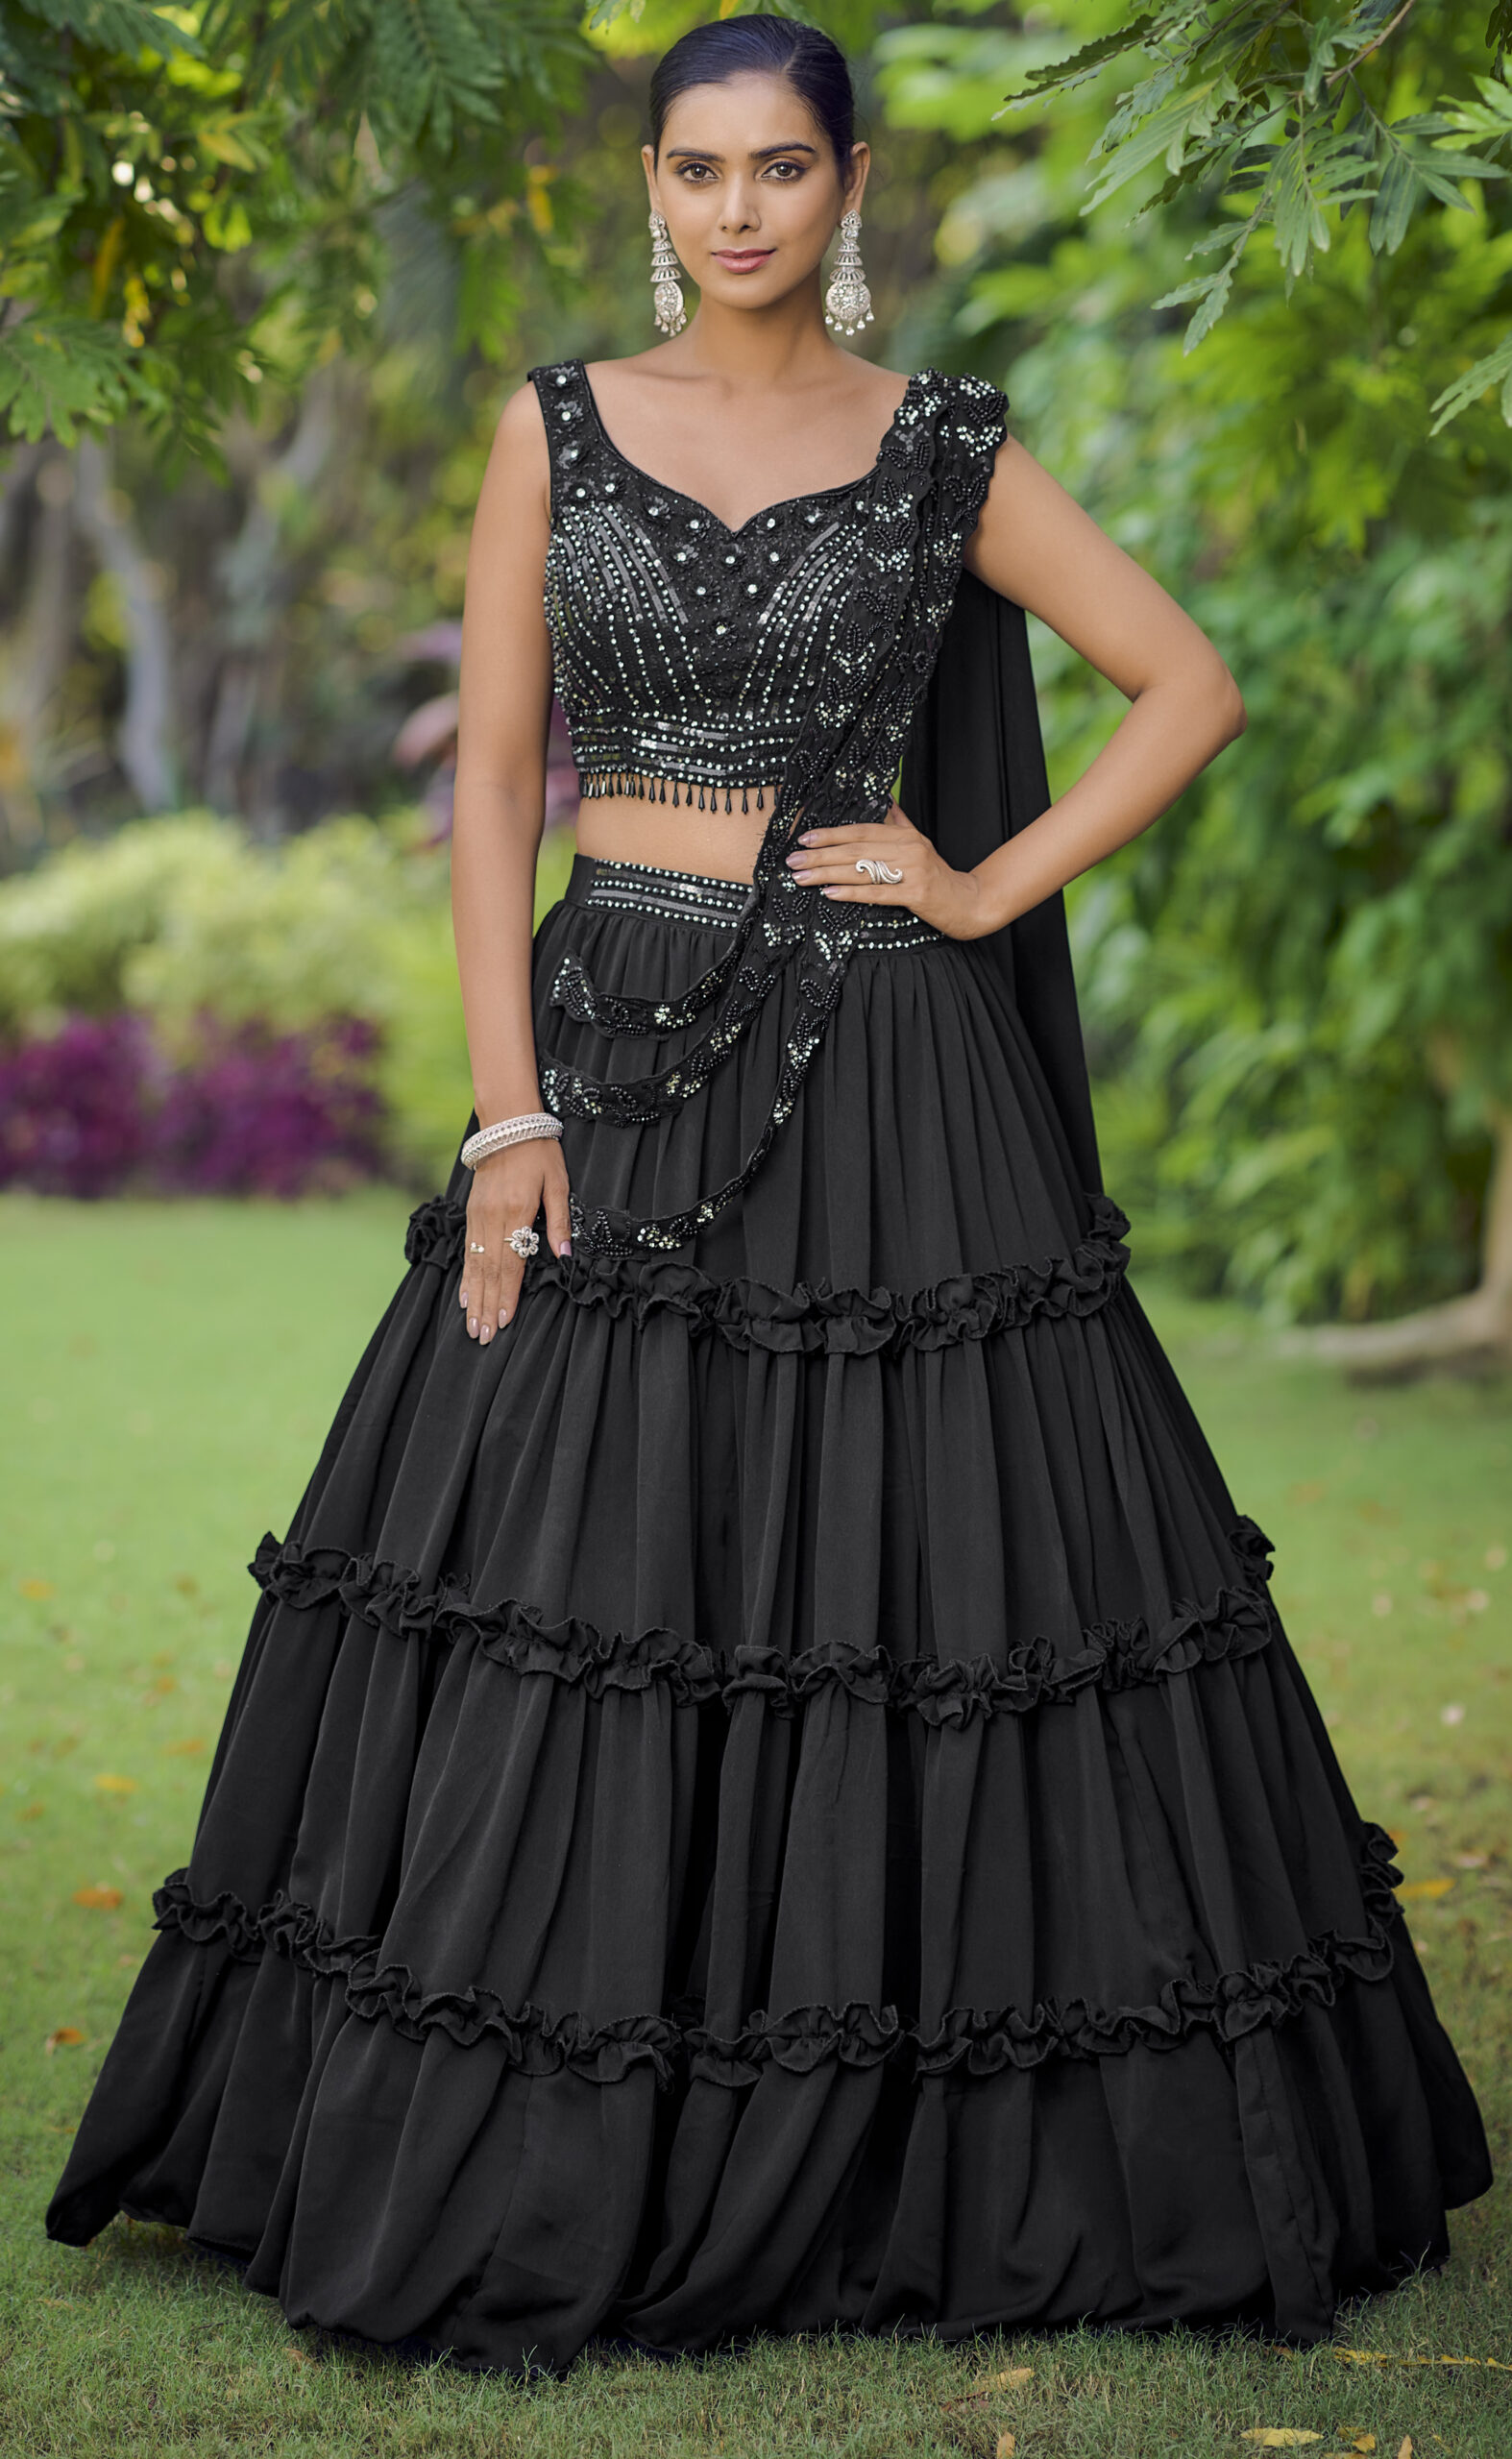 Indo Western Lehenga For Bride | Punjaban Designer Boutique